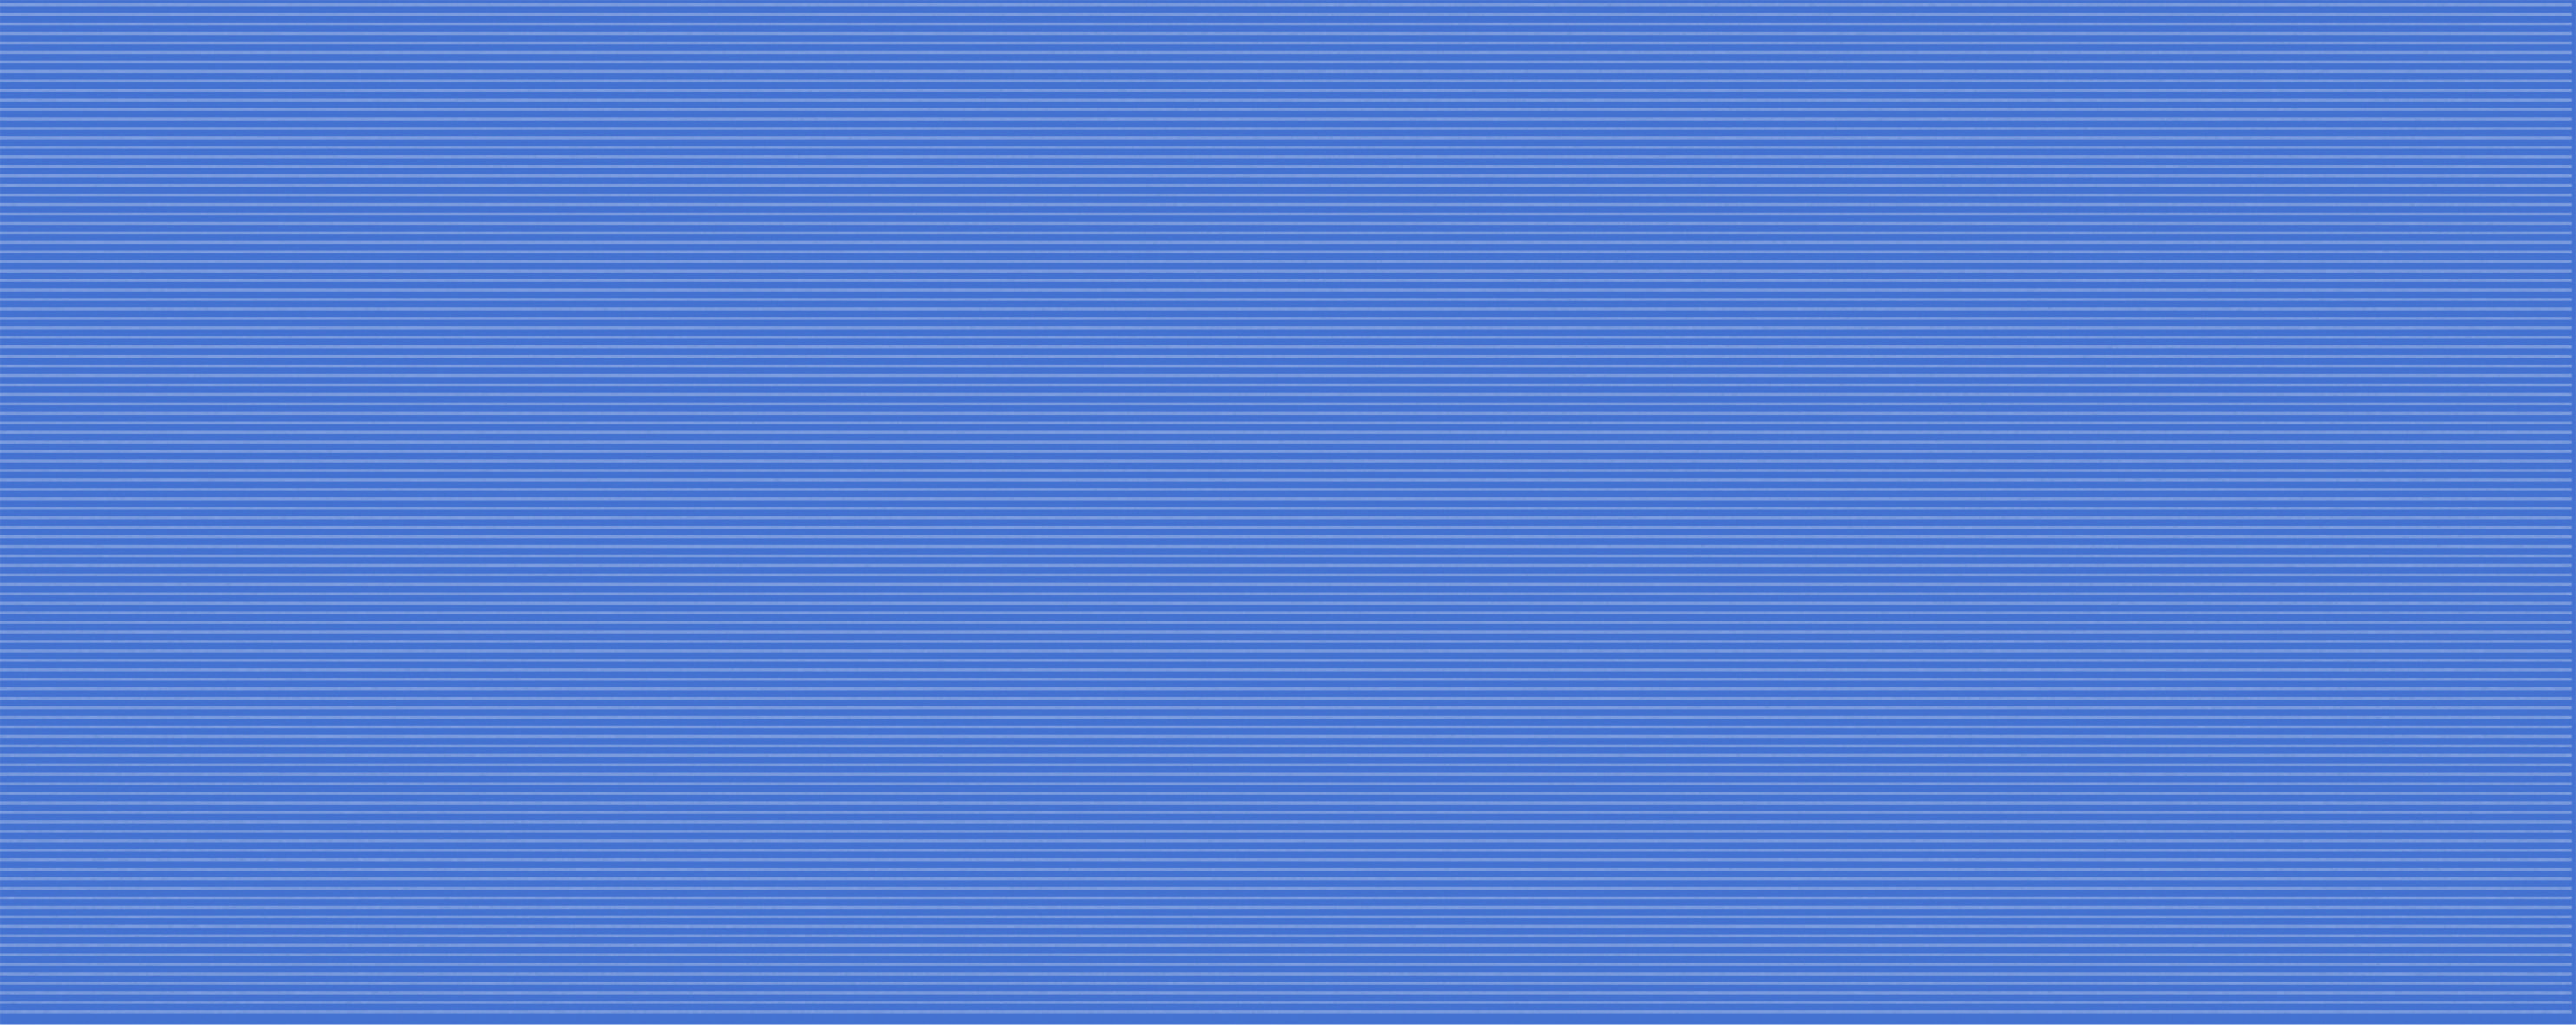 91020573 Настенная плитка Splendida SPLENDIDA AZUL 20.1x50.5см 1.52 м² цвет синий STLM-0444513 KERLIFE